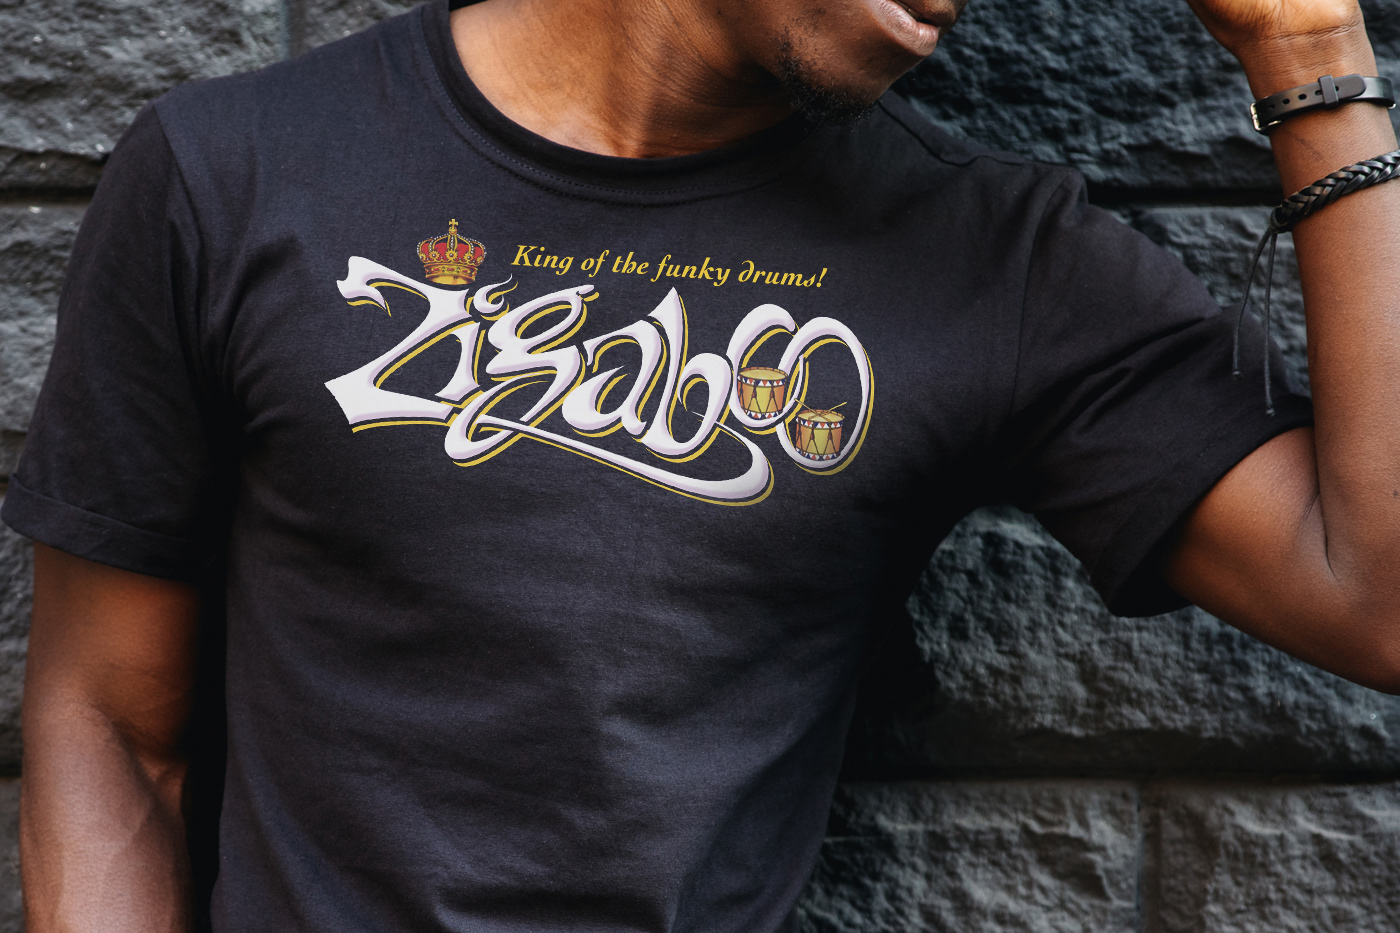 Zigaboo Logo & T-shirt design by Christopher Jennings